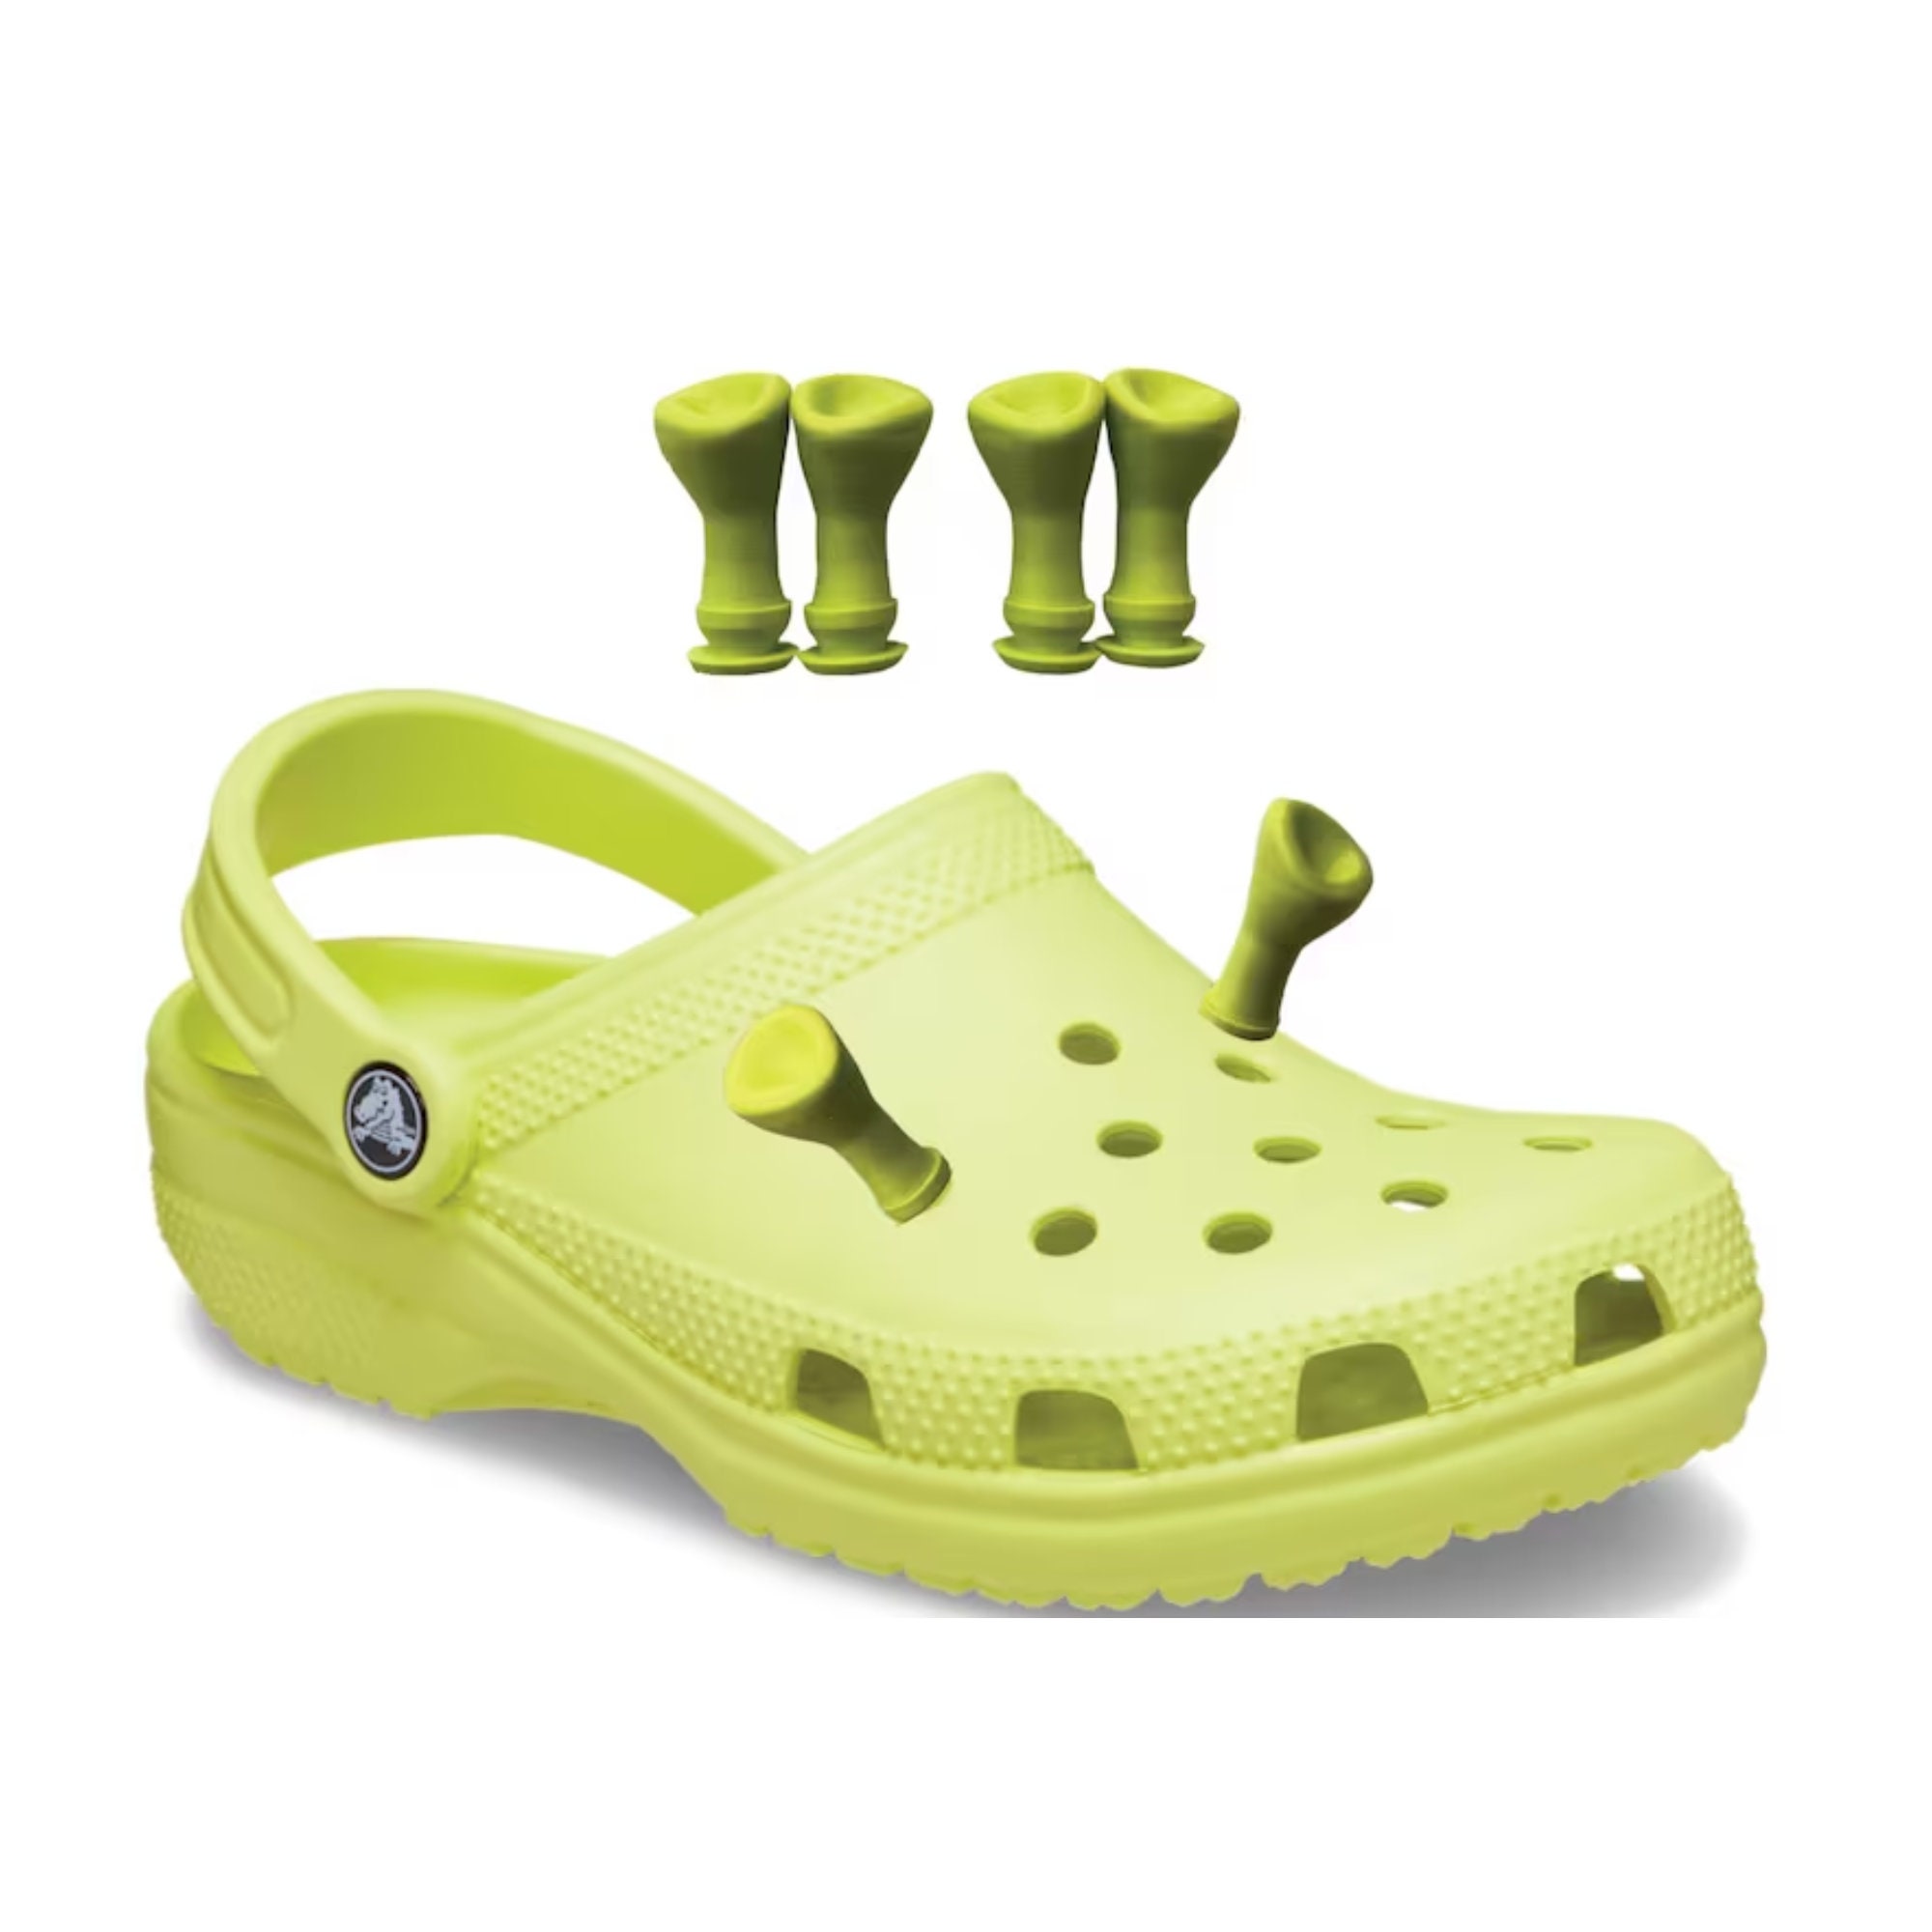  4pcs Croc Shrek Ear Charms Shrek Party Decorations, Green :  Clothing, Shoes & Jewelry